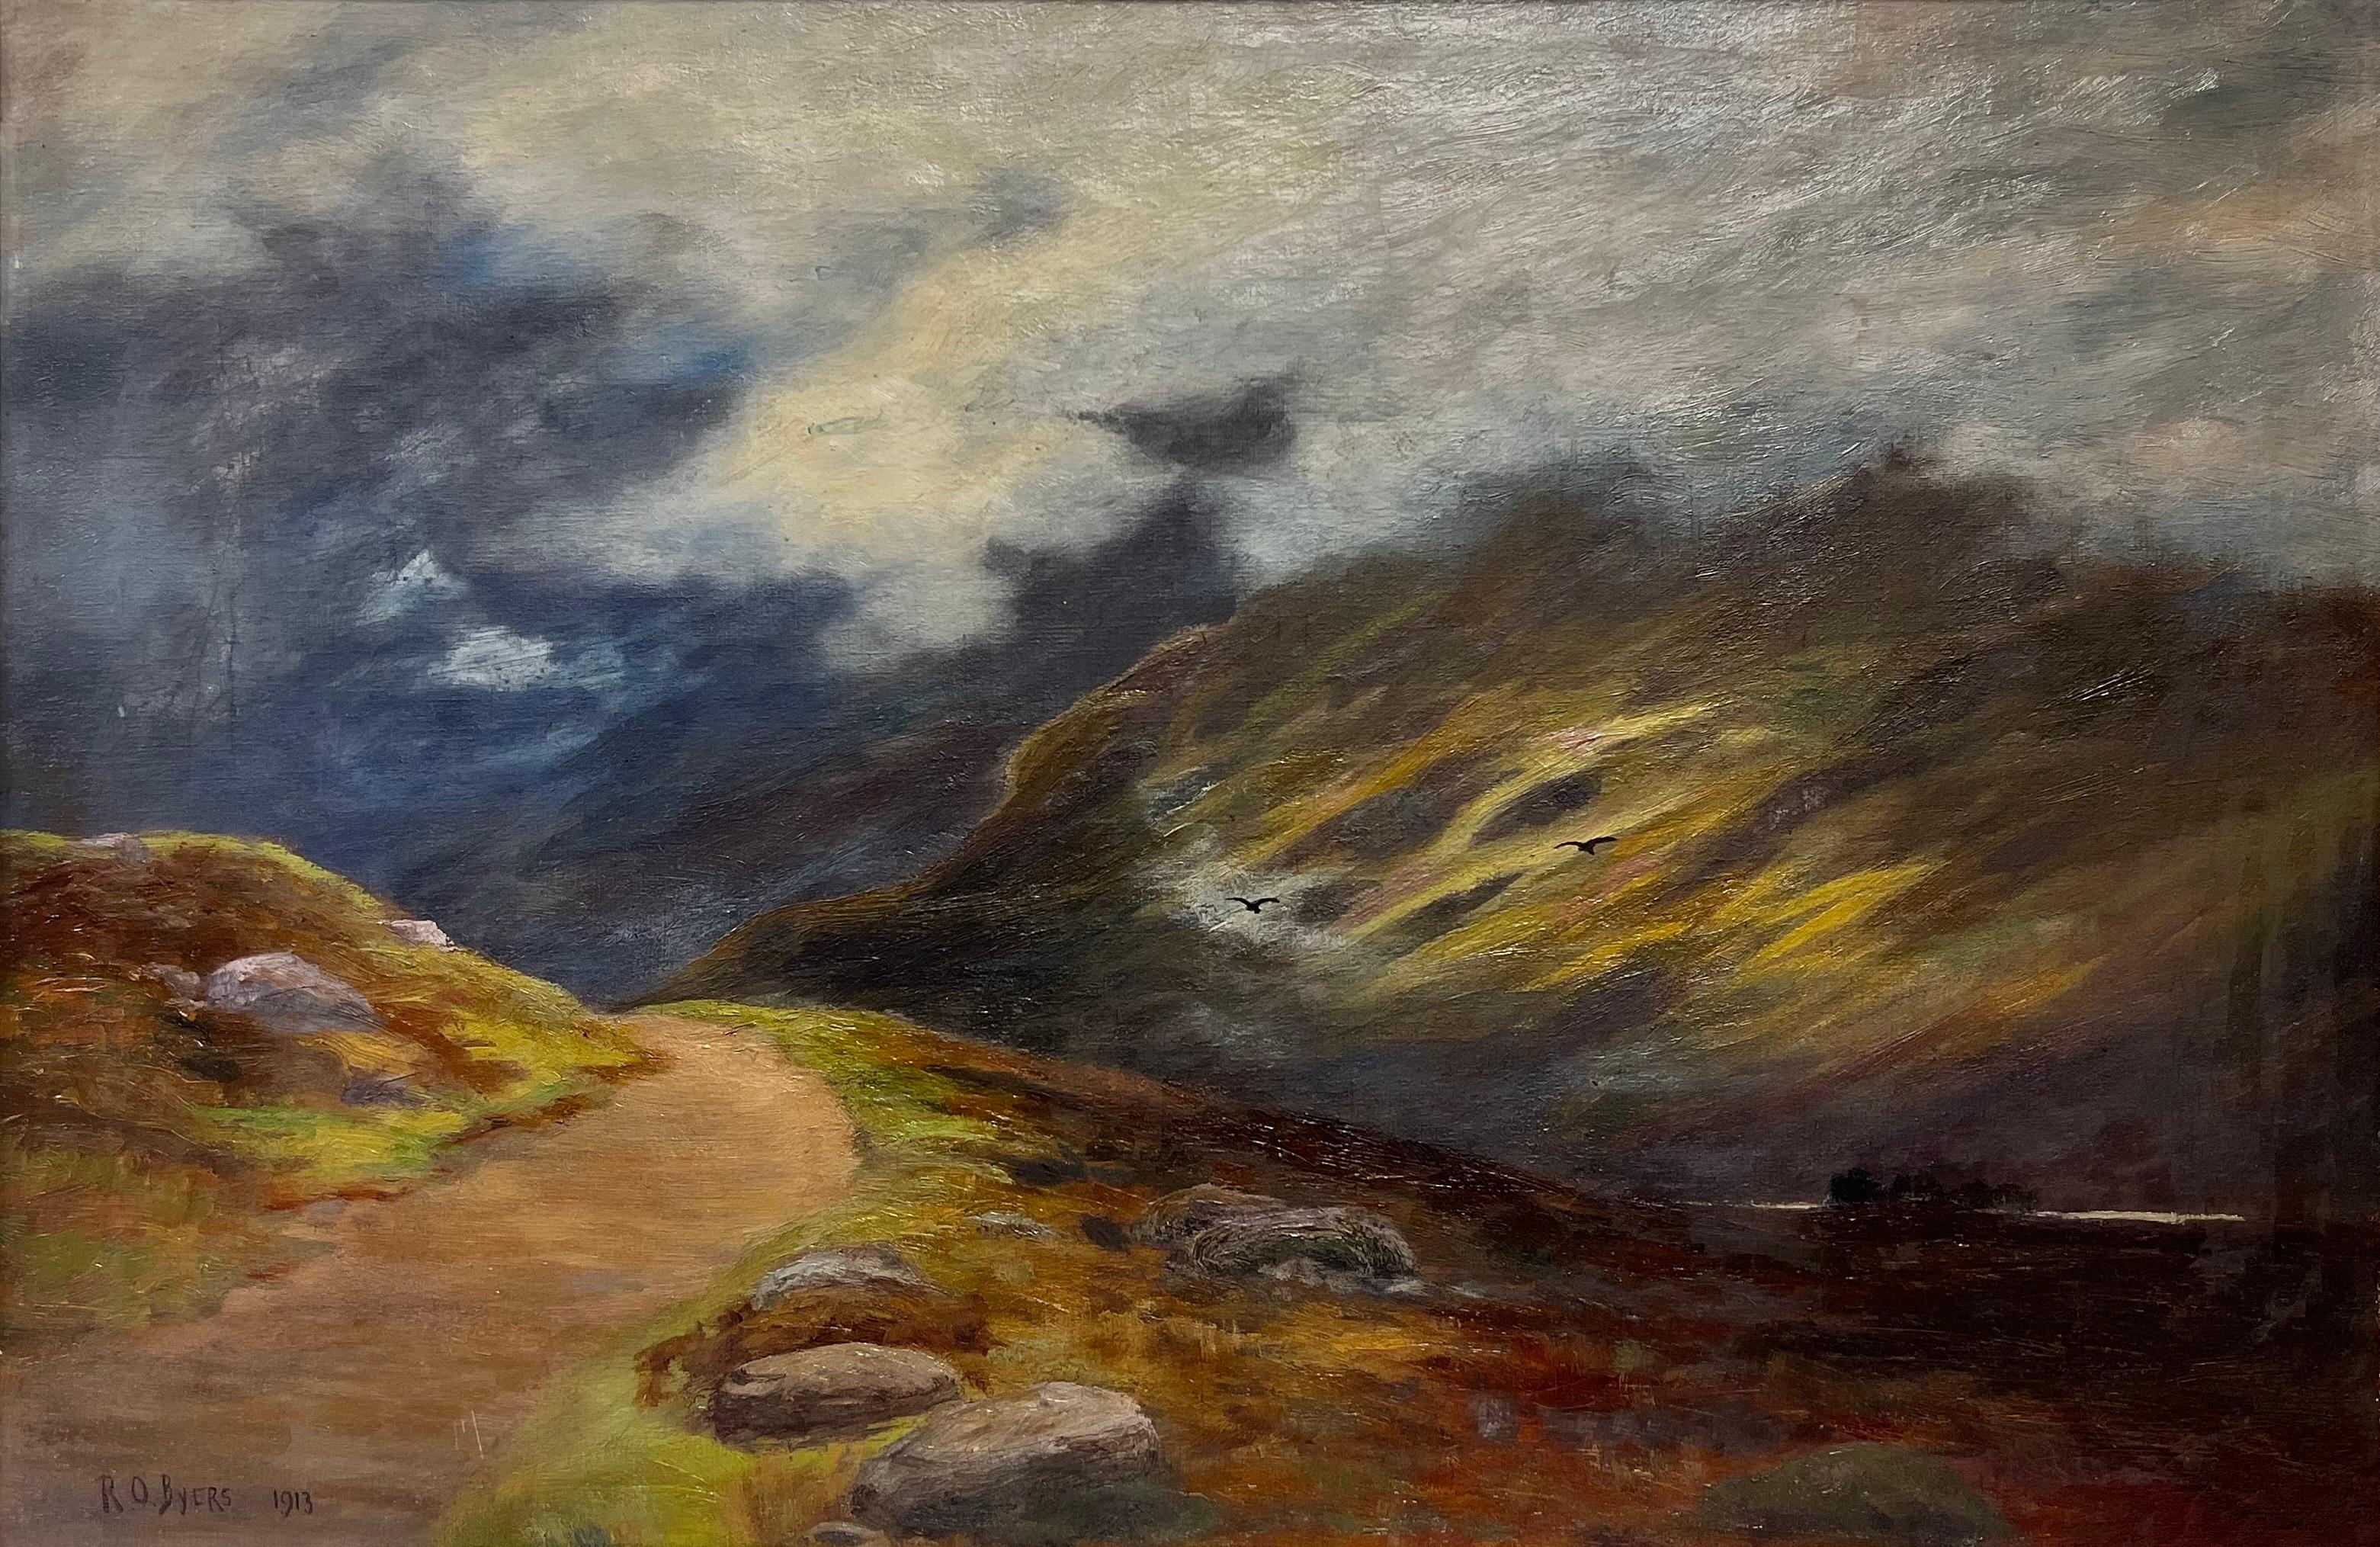 R. O. Byers, Scottish Animal Painting - Atmospheric & Moody Scottish Highlands Landscape, signed oil Misty Mountain Glen